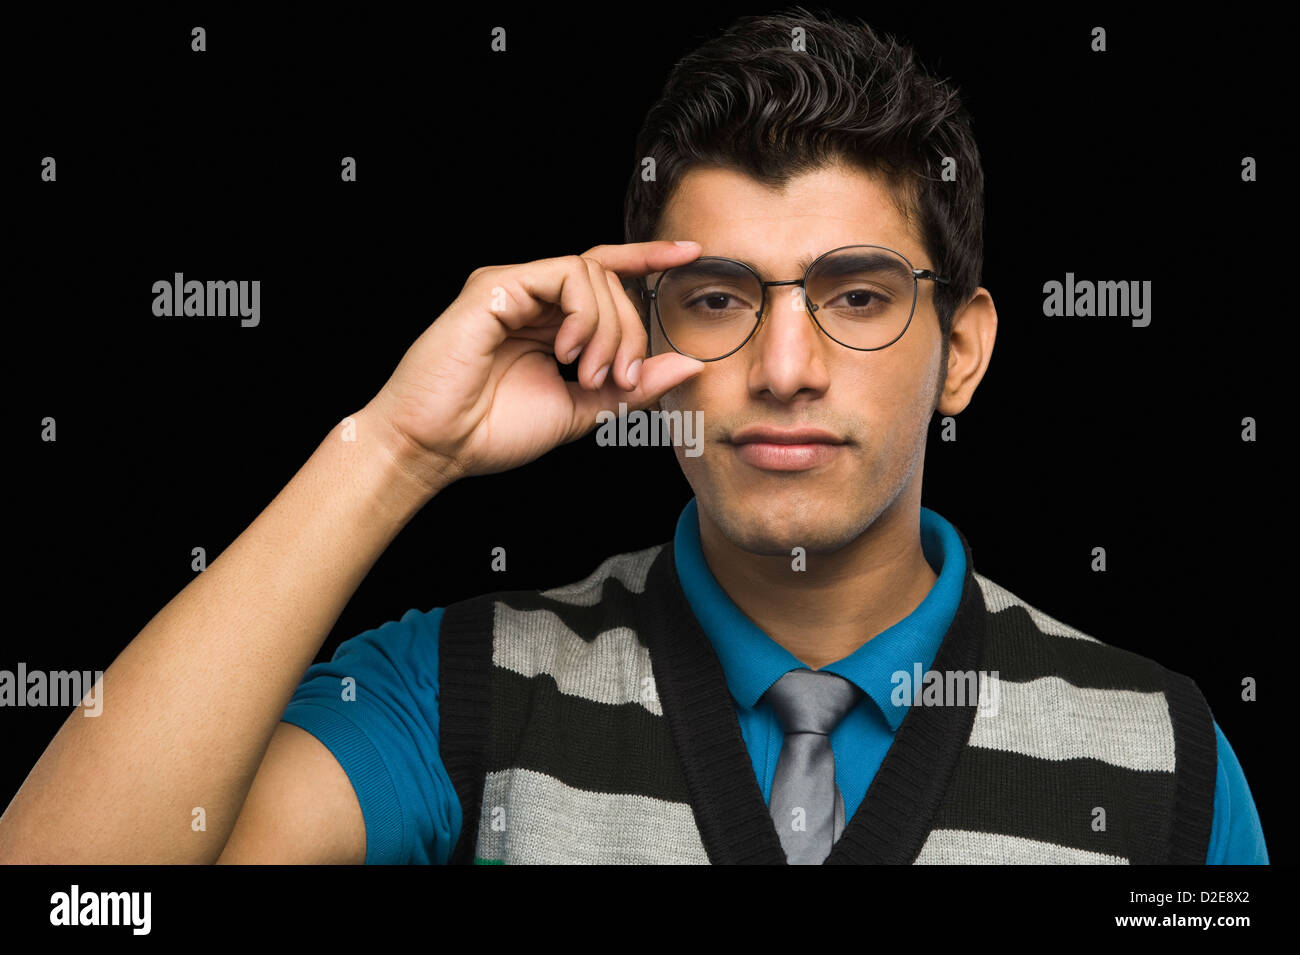 Portrait of a man wearing eyeglasses Stock Photo